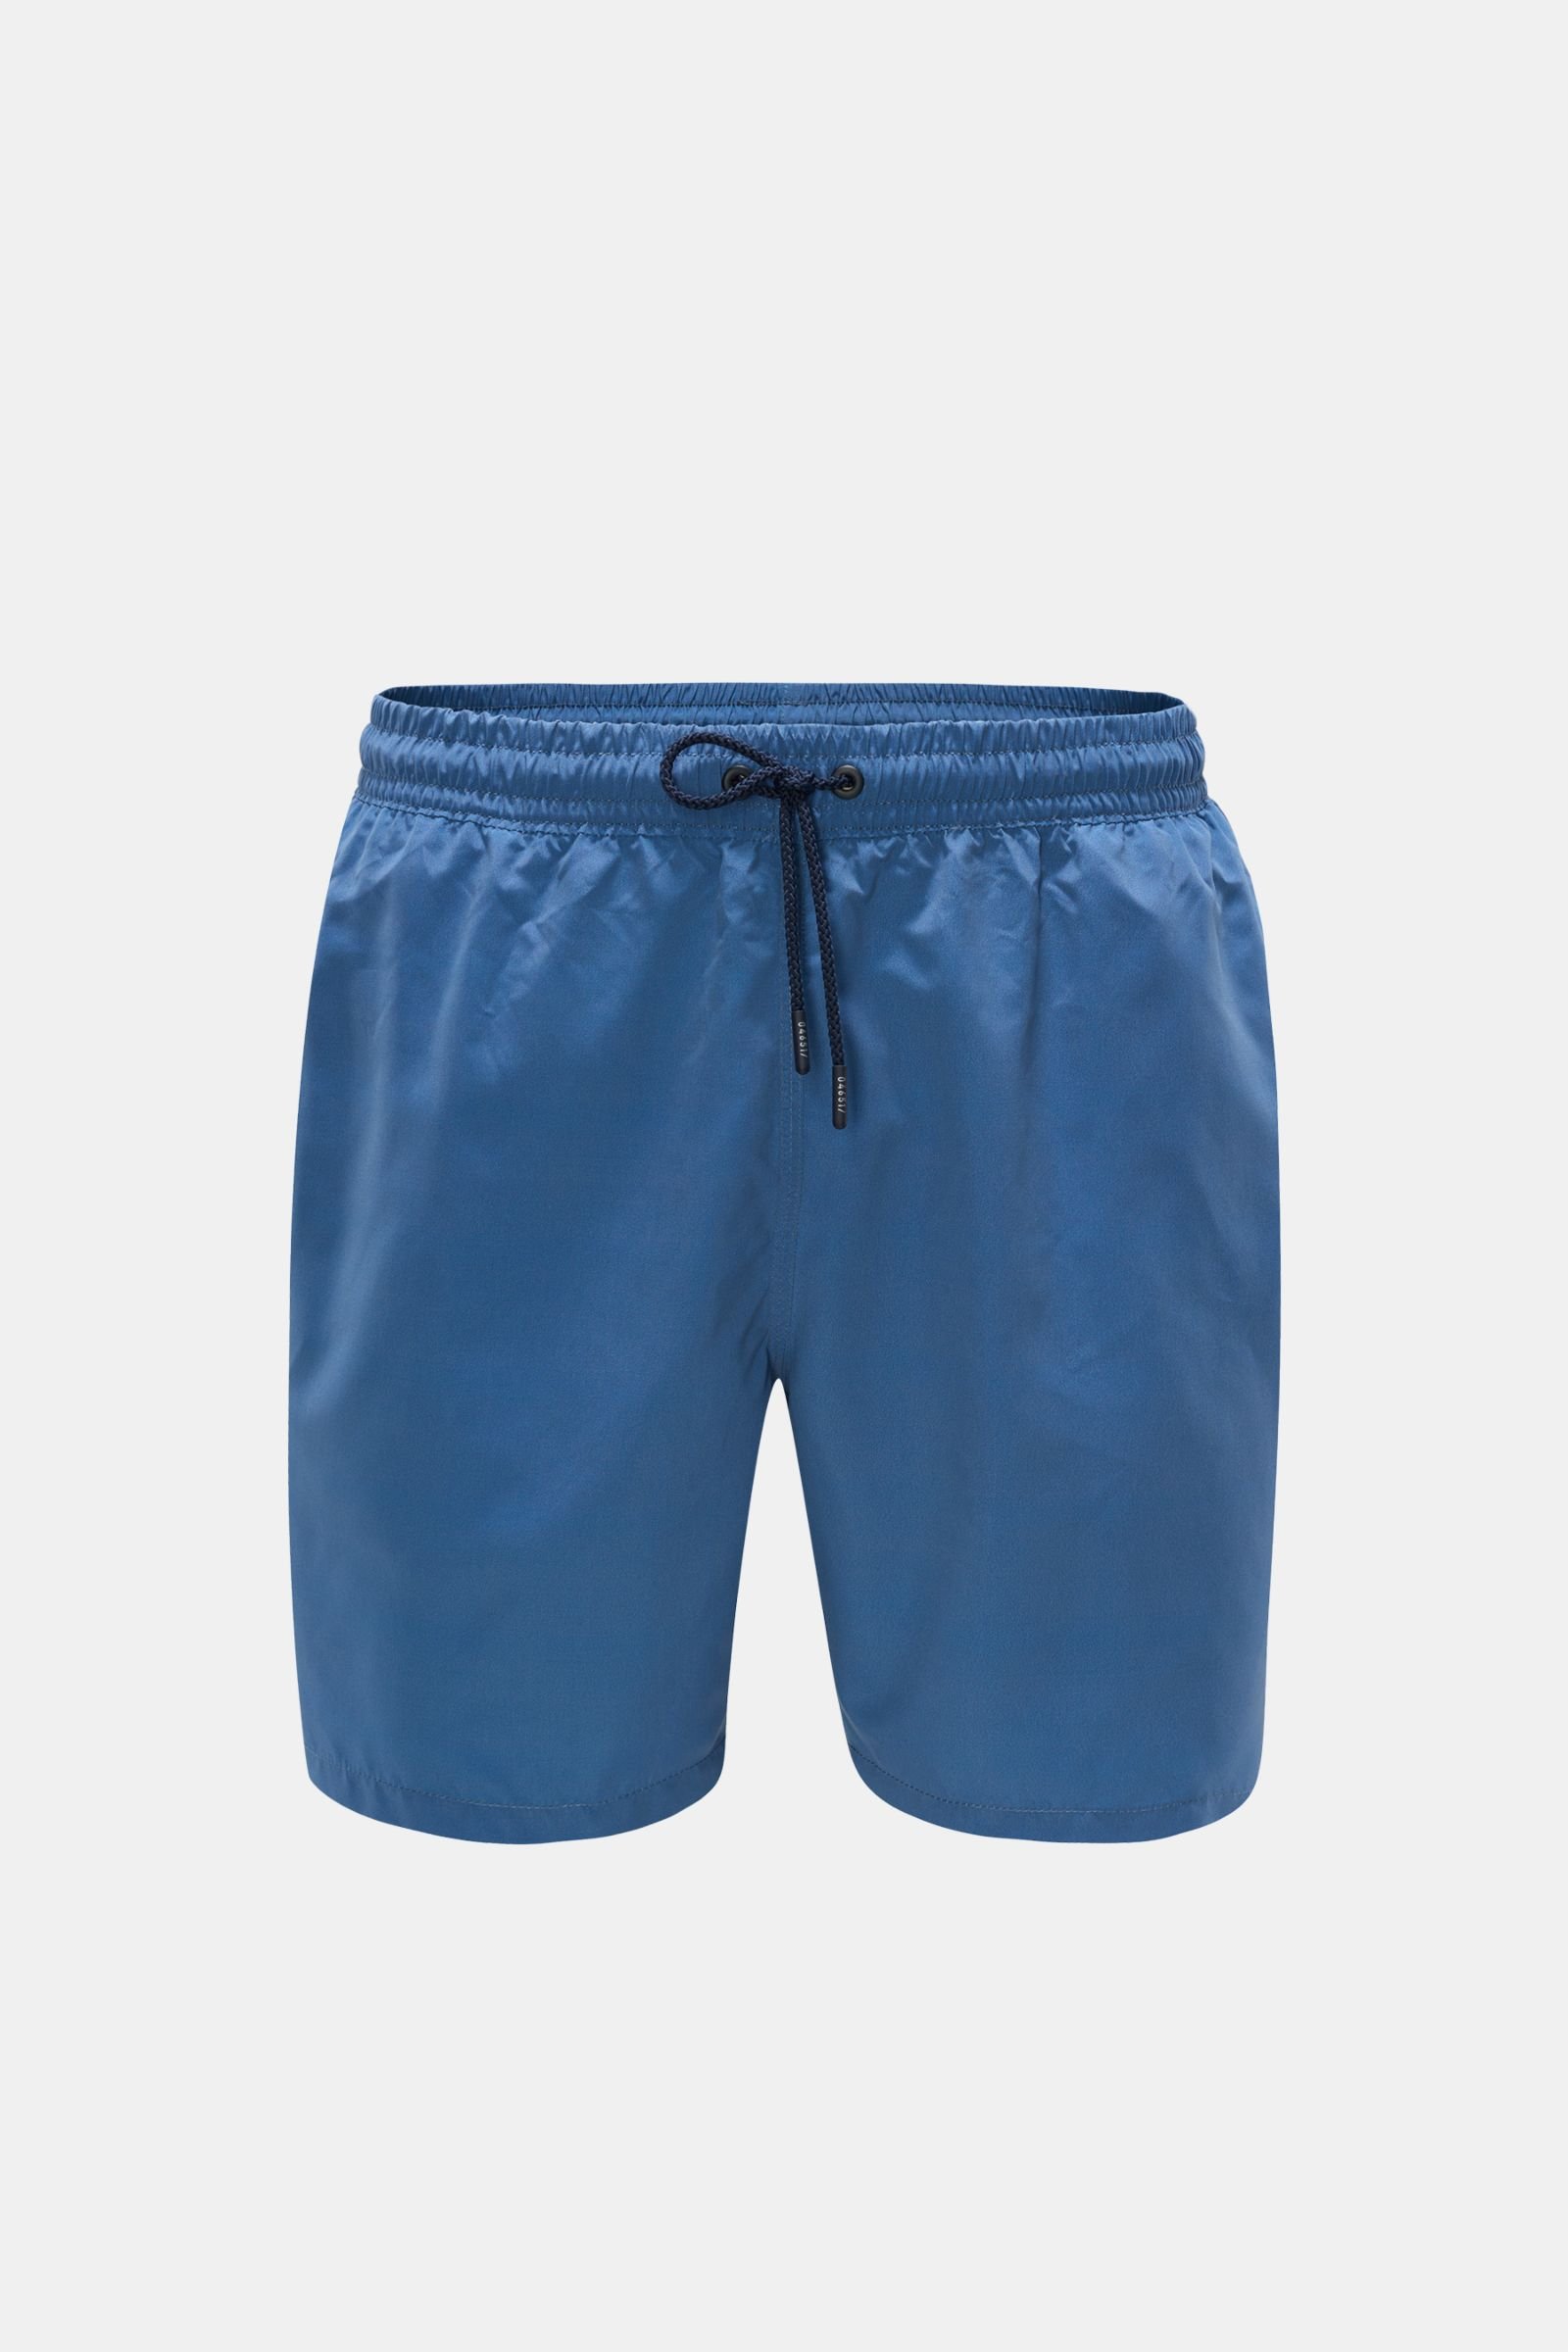 Swim shorts grey-blue